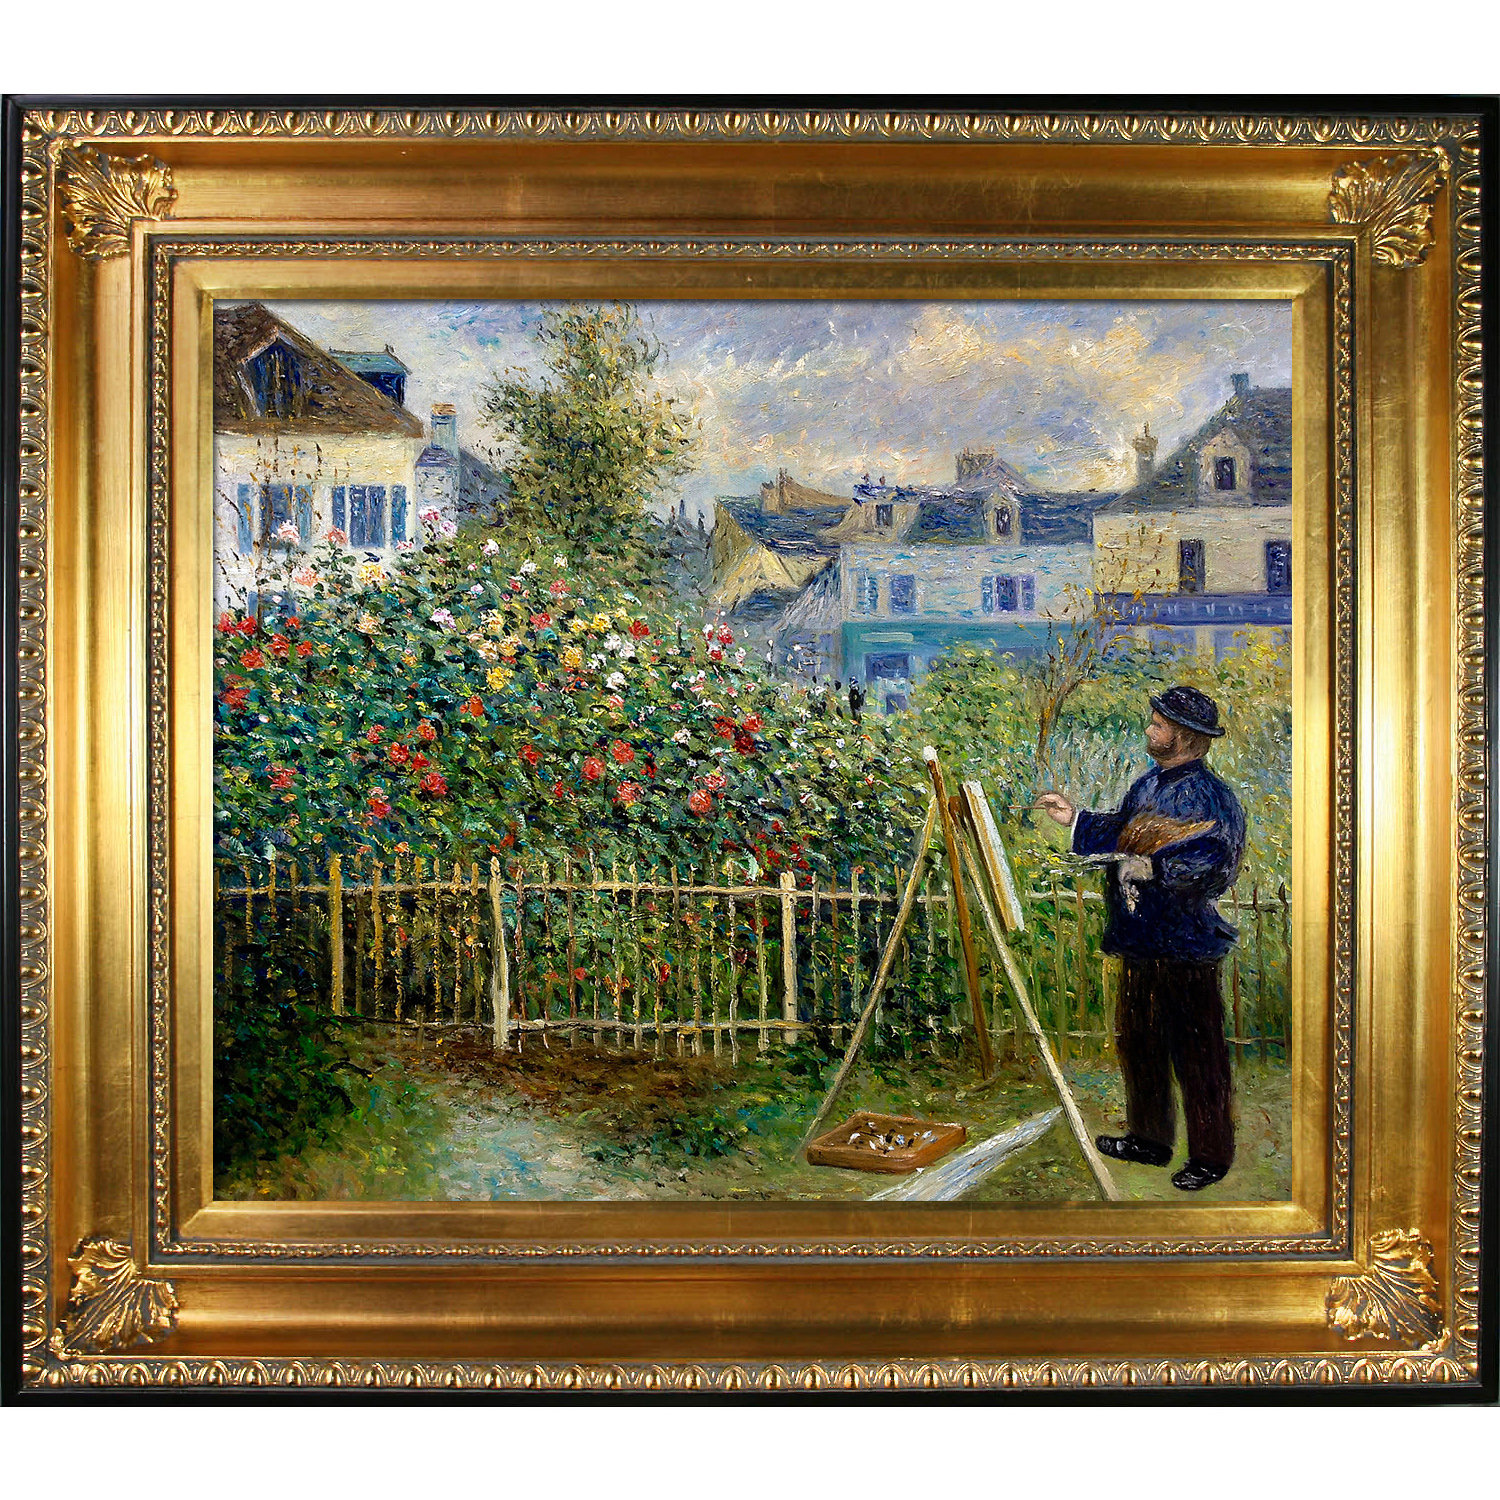 Antique Finish OverstockArt Monet Artist/'s Garden with Athenian Gold Frame Oil Painting